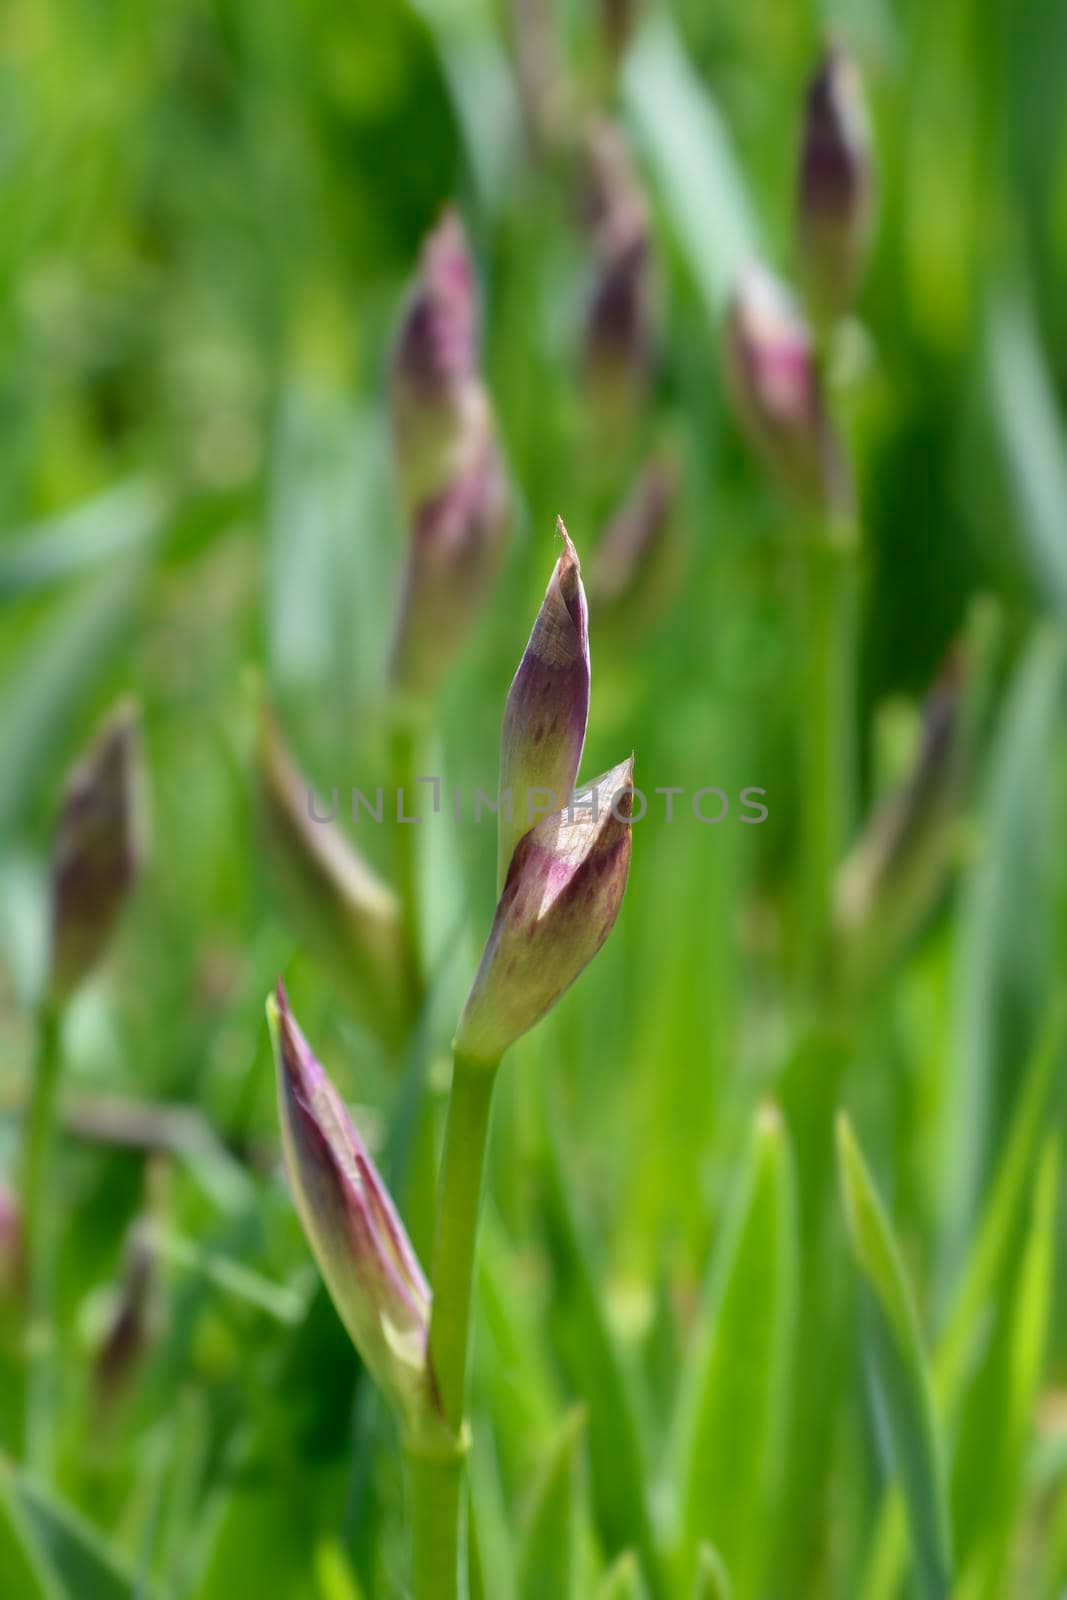 Illyrian iris by nahhan